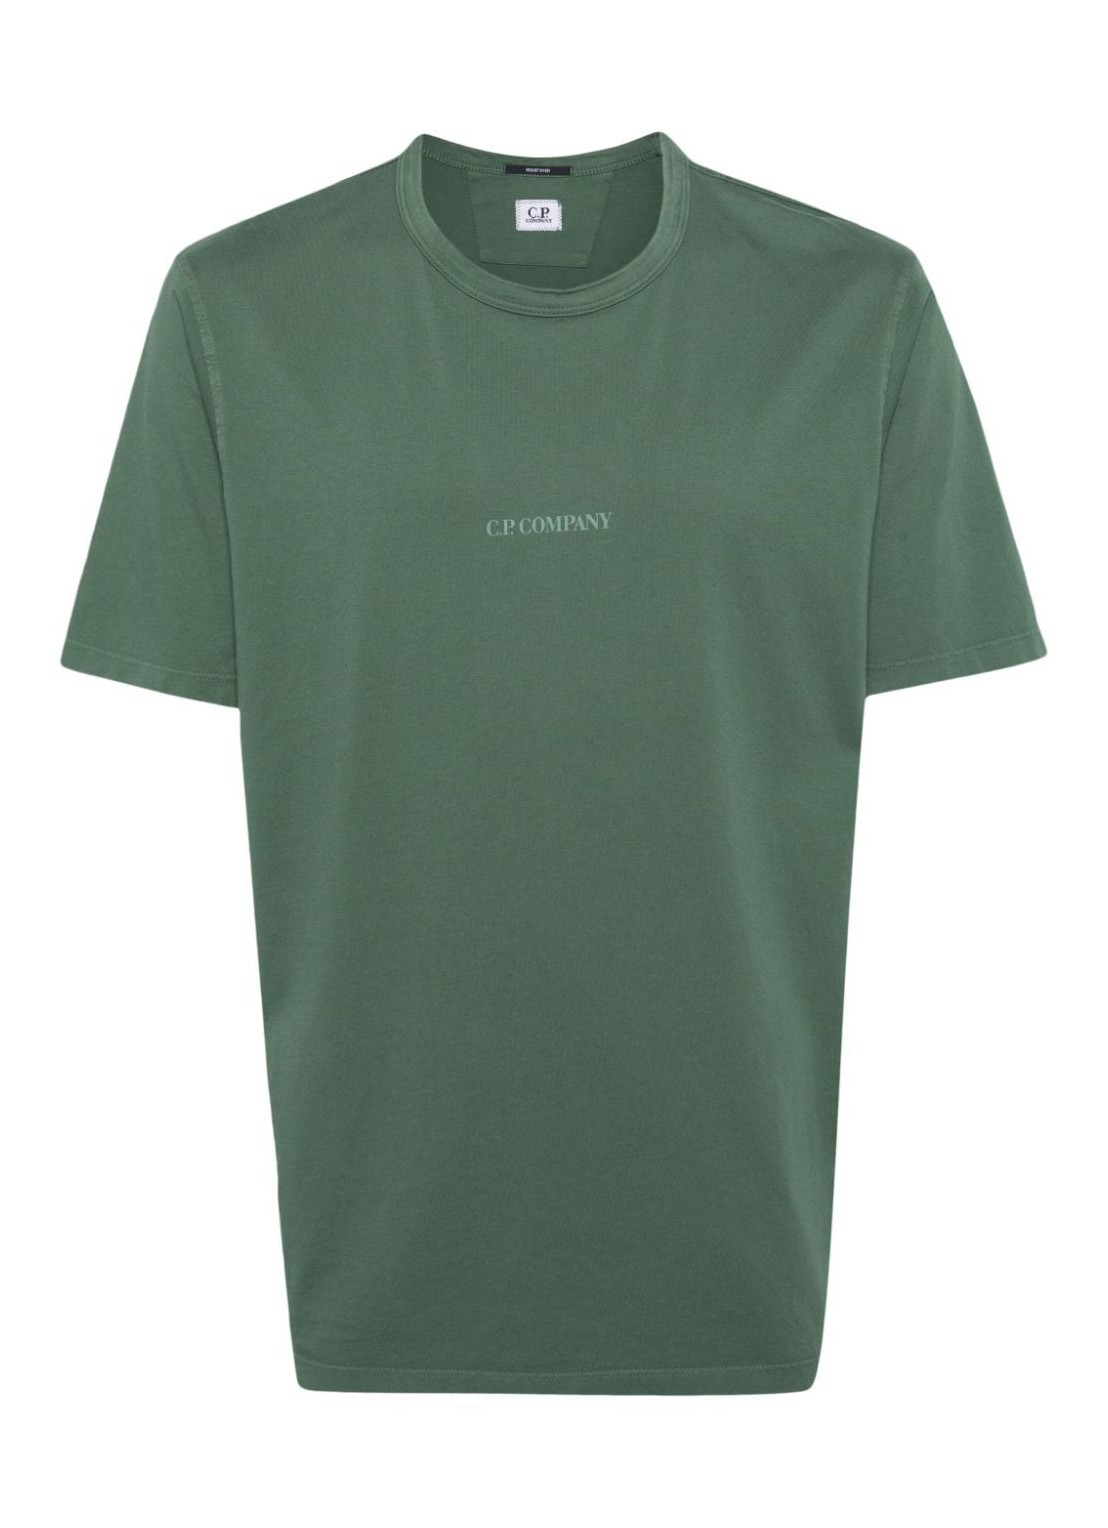 Camiseta c.p.company t-shirt man 24/1 jersey resist dyed logo t-shirt 16cmts085a005431r 649 talla ve